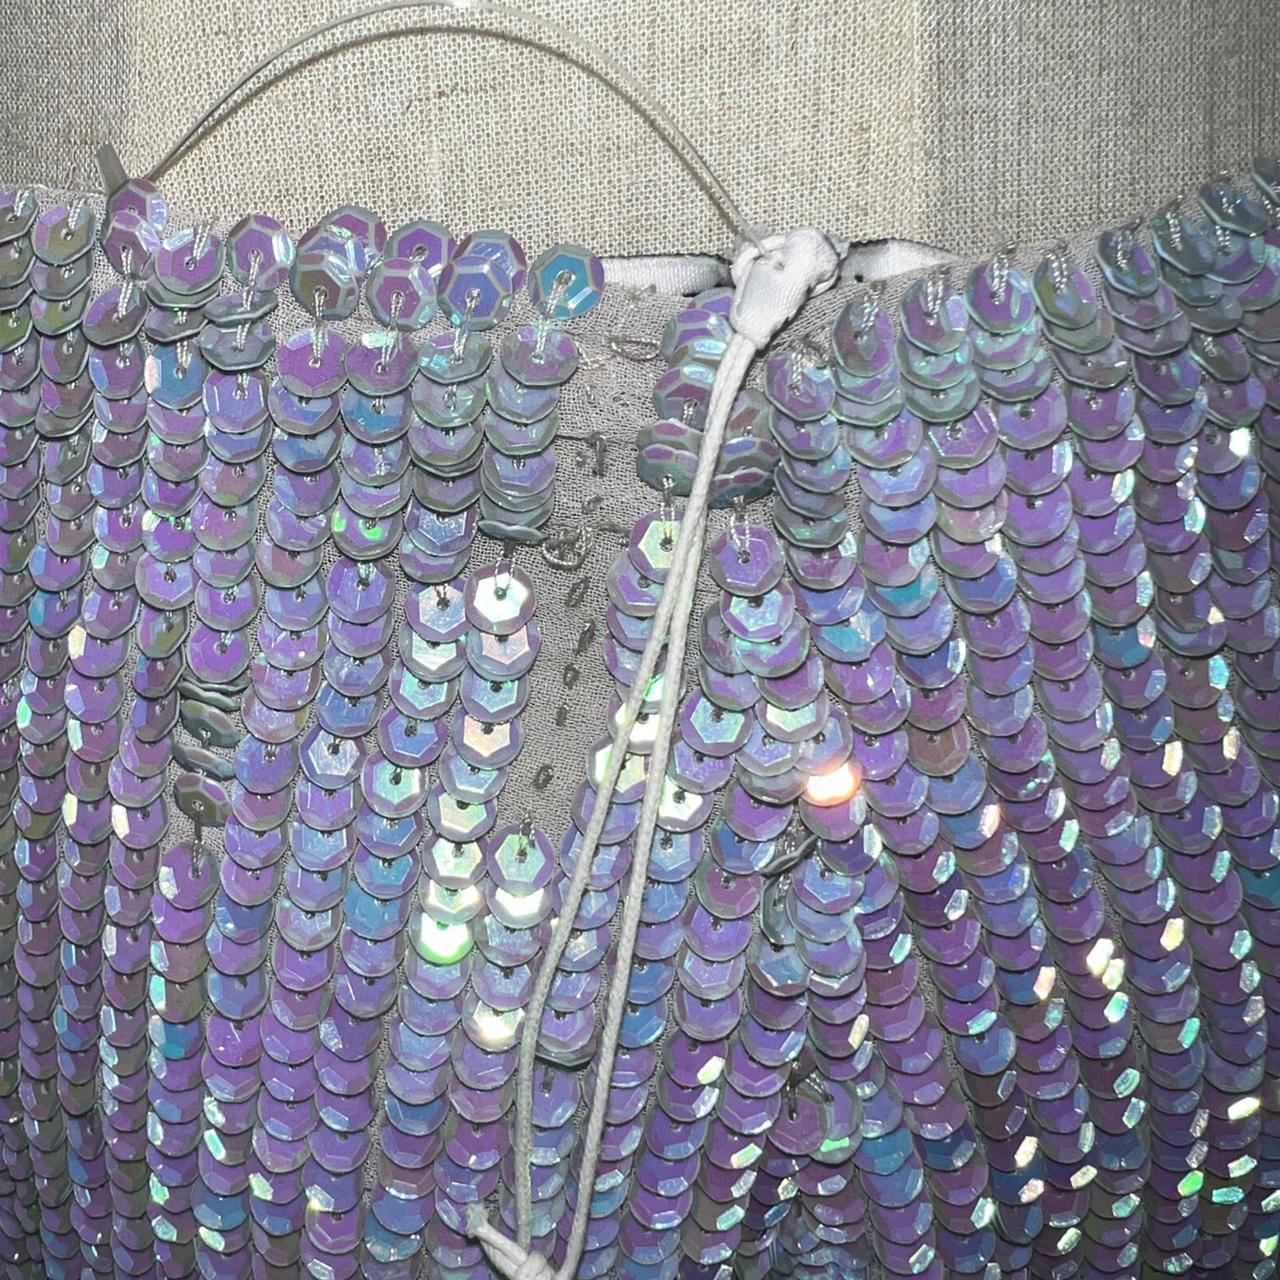 Product Image 3 - Glamorous disco iridescent sequin shorts

Brand